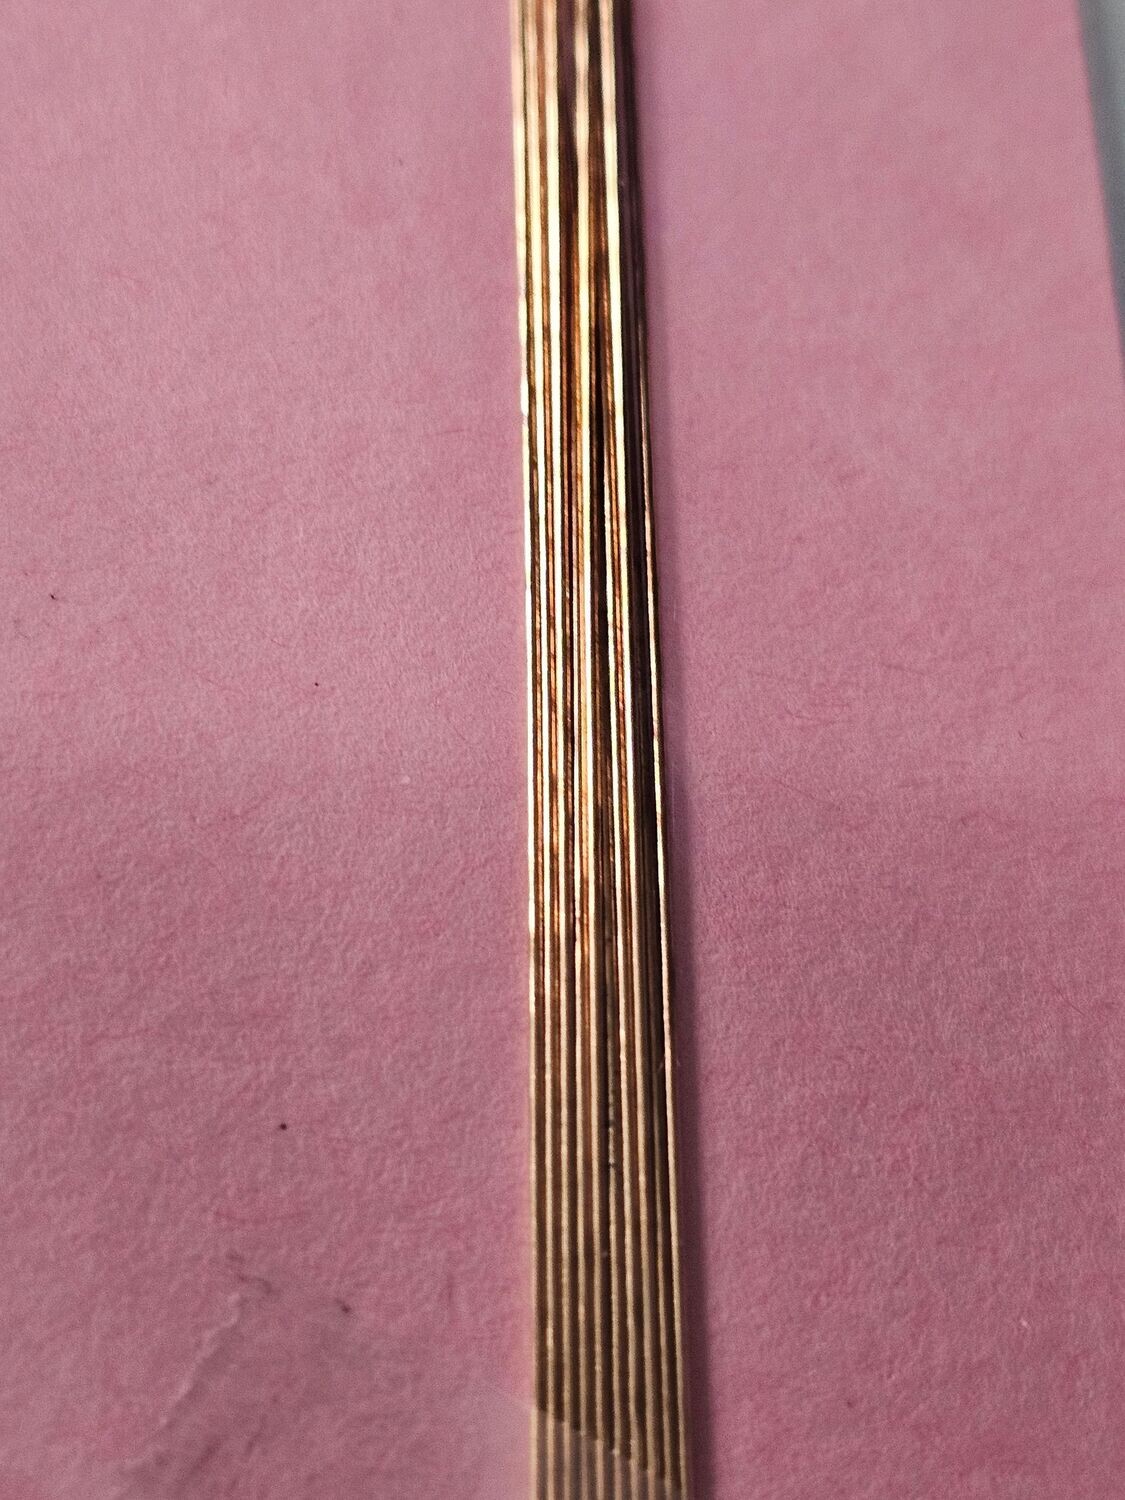 Phosphor Bronze straight wire 0.35mm dia x 250mm (10)